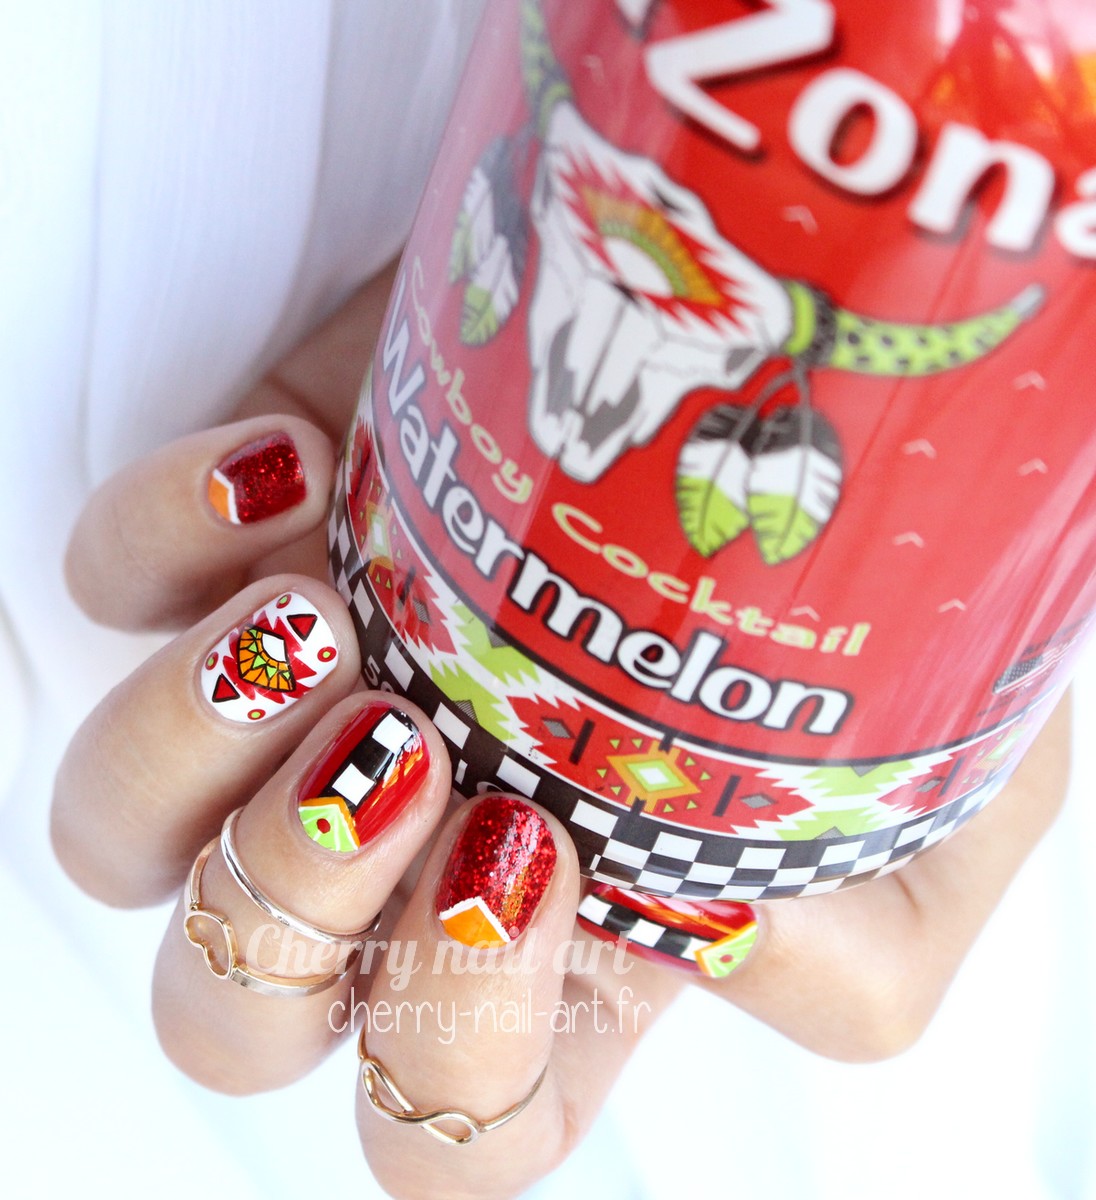 nail-art-arizona-watermelon-paillettes